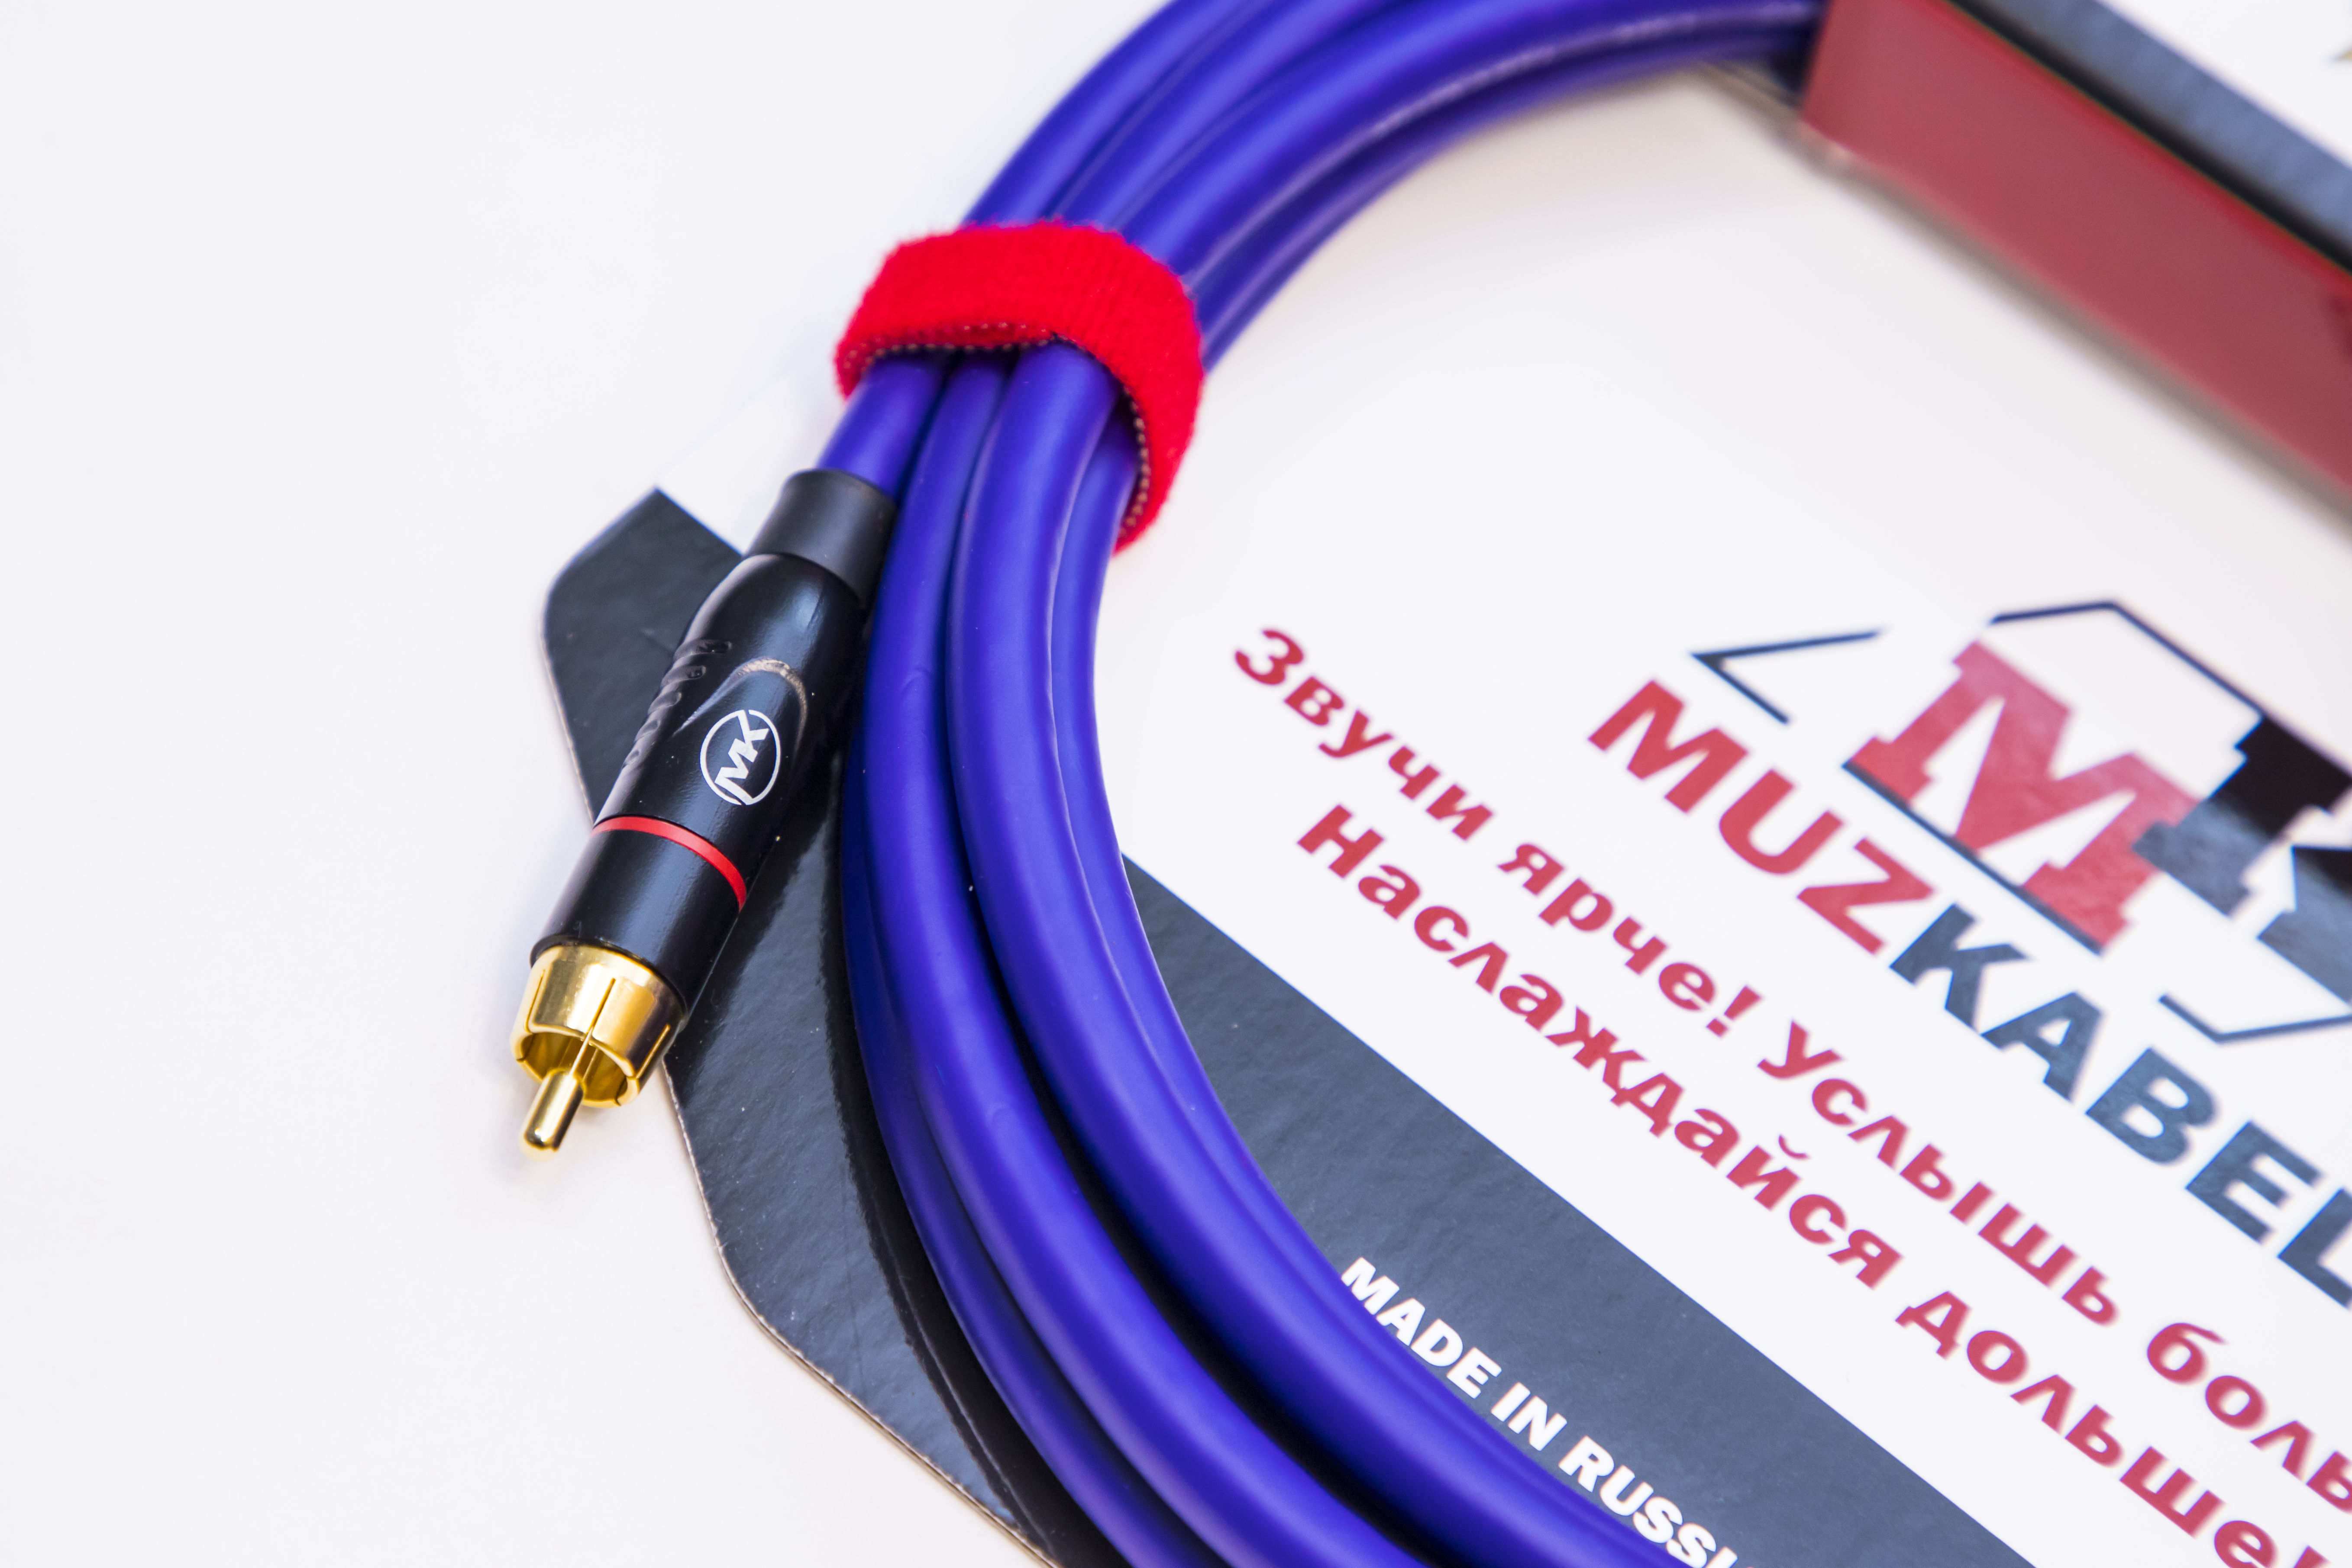 Аудио кабель MUZKABEL RRFMK1V - 1 метр, RCA – RCA